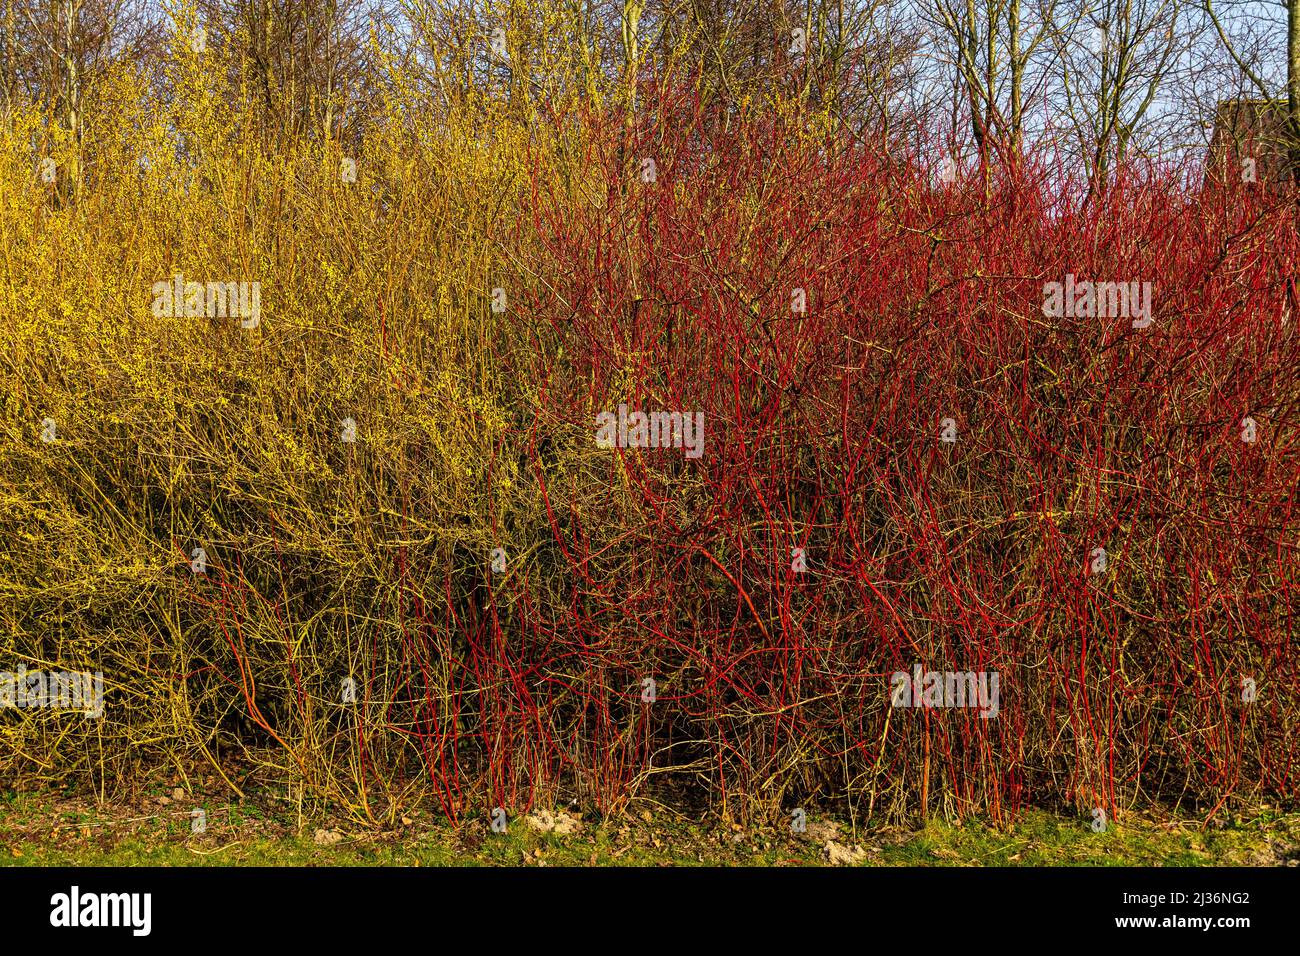 Shrubs of Yellow Forstizia, Forsythia europaea Degen & Bald, and Red-barked Dogwood, Cornus Alba. Assens, Denmark, Europe Stock Photo